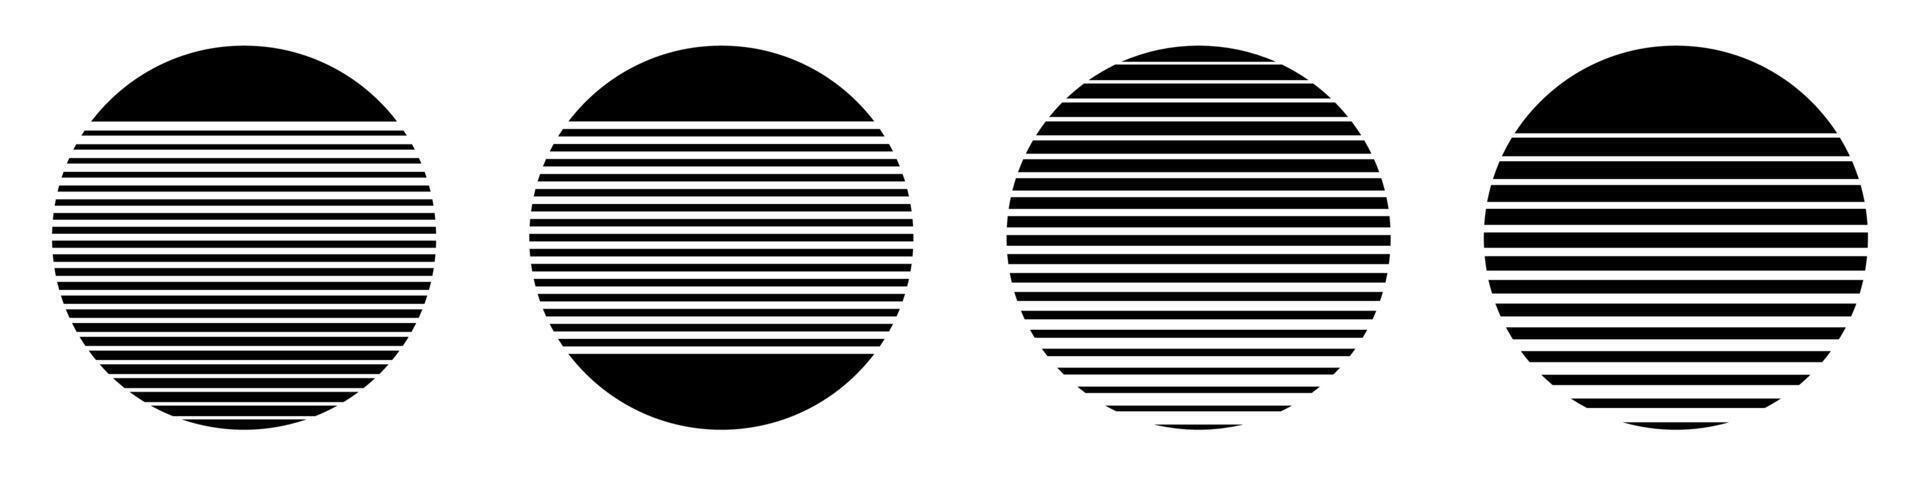 wijnoogst zon cirkel logo. oud zonsopkomst zonsondergang ontwerp embleem. vector